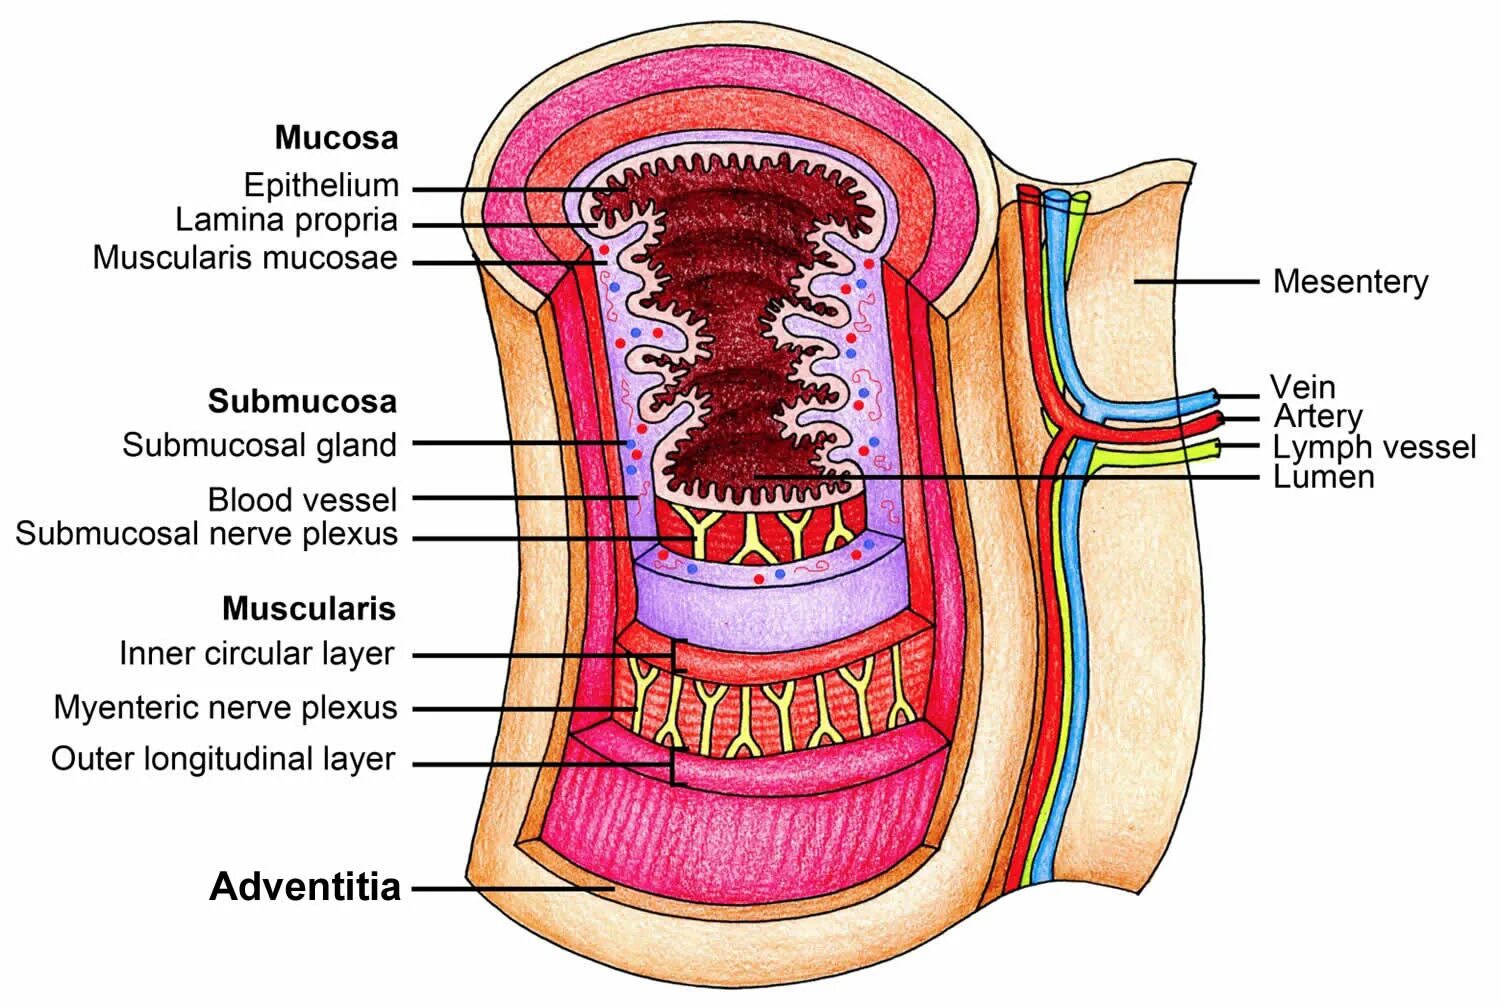 Esophagus Anatomy. Esophagus structure. Пищевод строение анатомия. Схема пищевода и желудка человека.